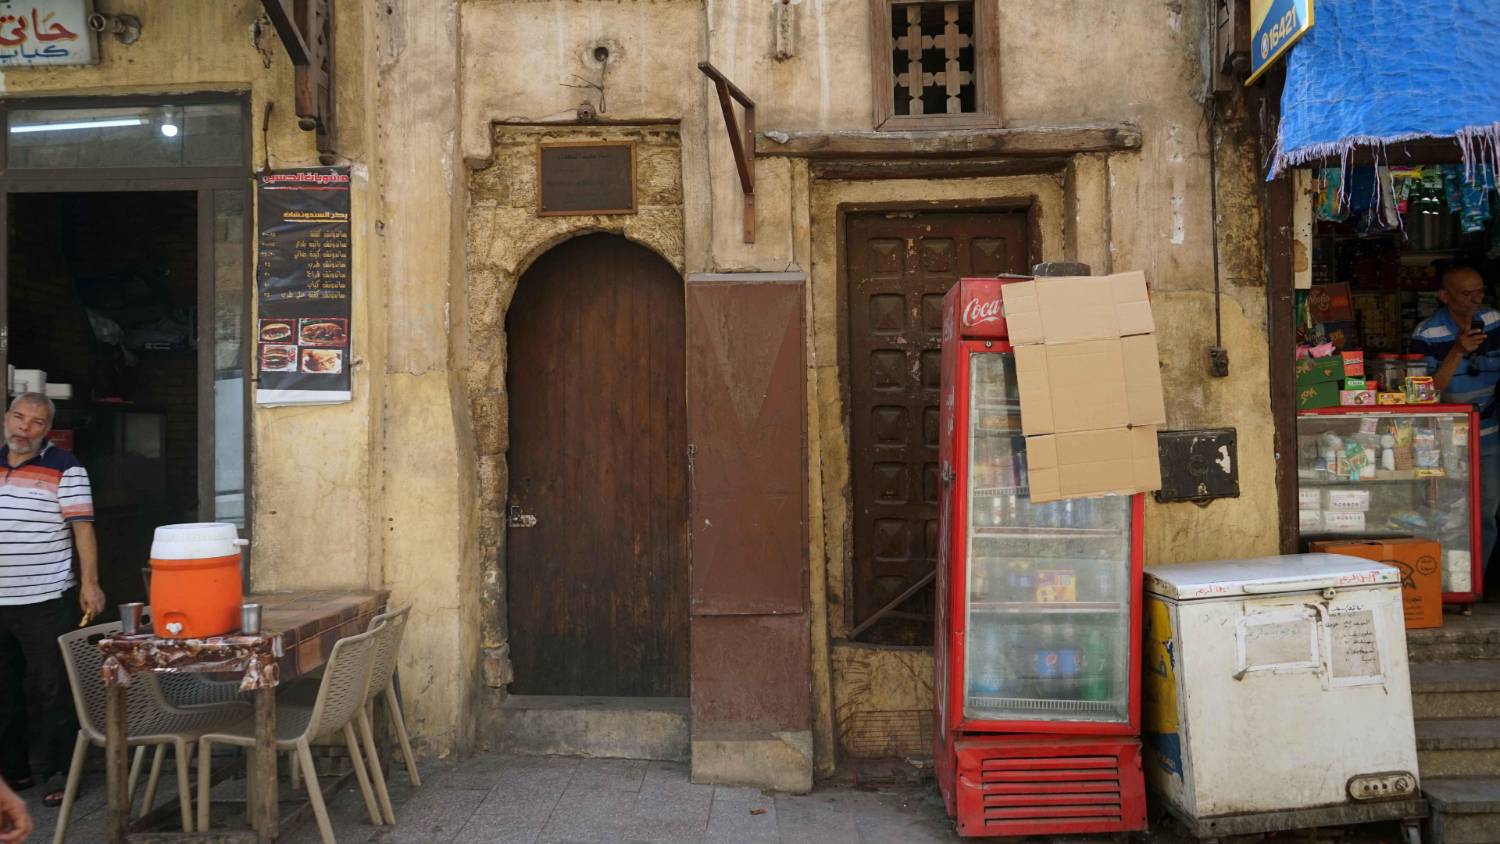 The entrance to hammam Gamaliya sits hidden between shops and restaurants in Cairo (MEE)